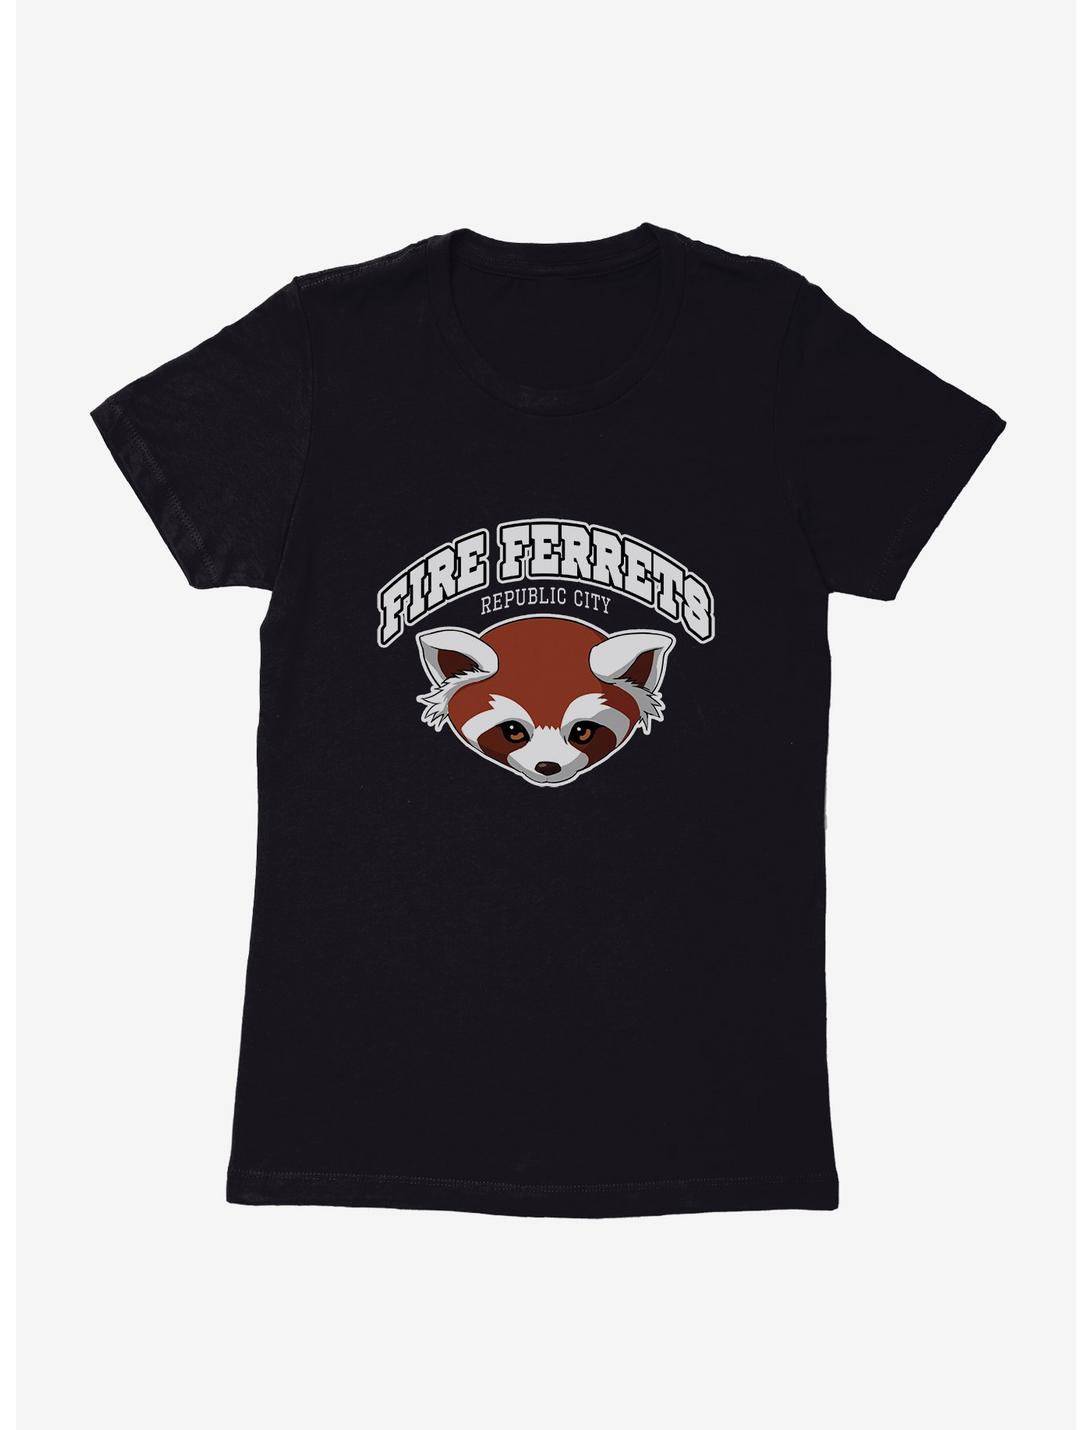 The Legend Of Korra Fire Ferrets Icon Womens T-Shirt, BLACK, hi-res